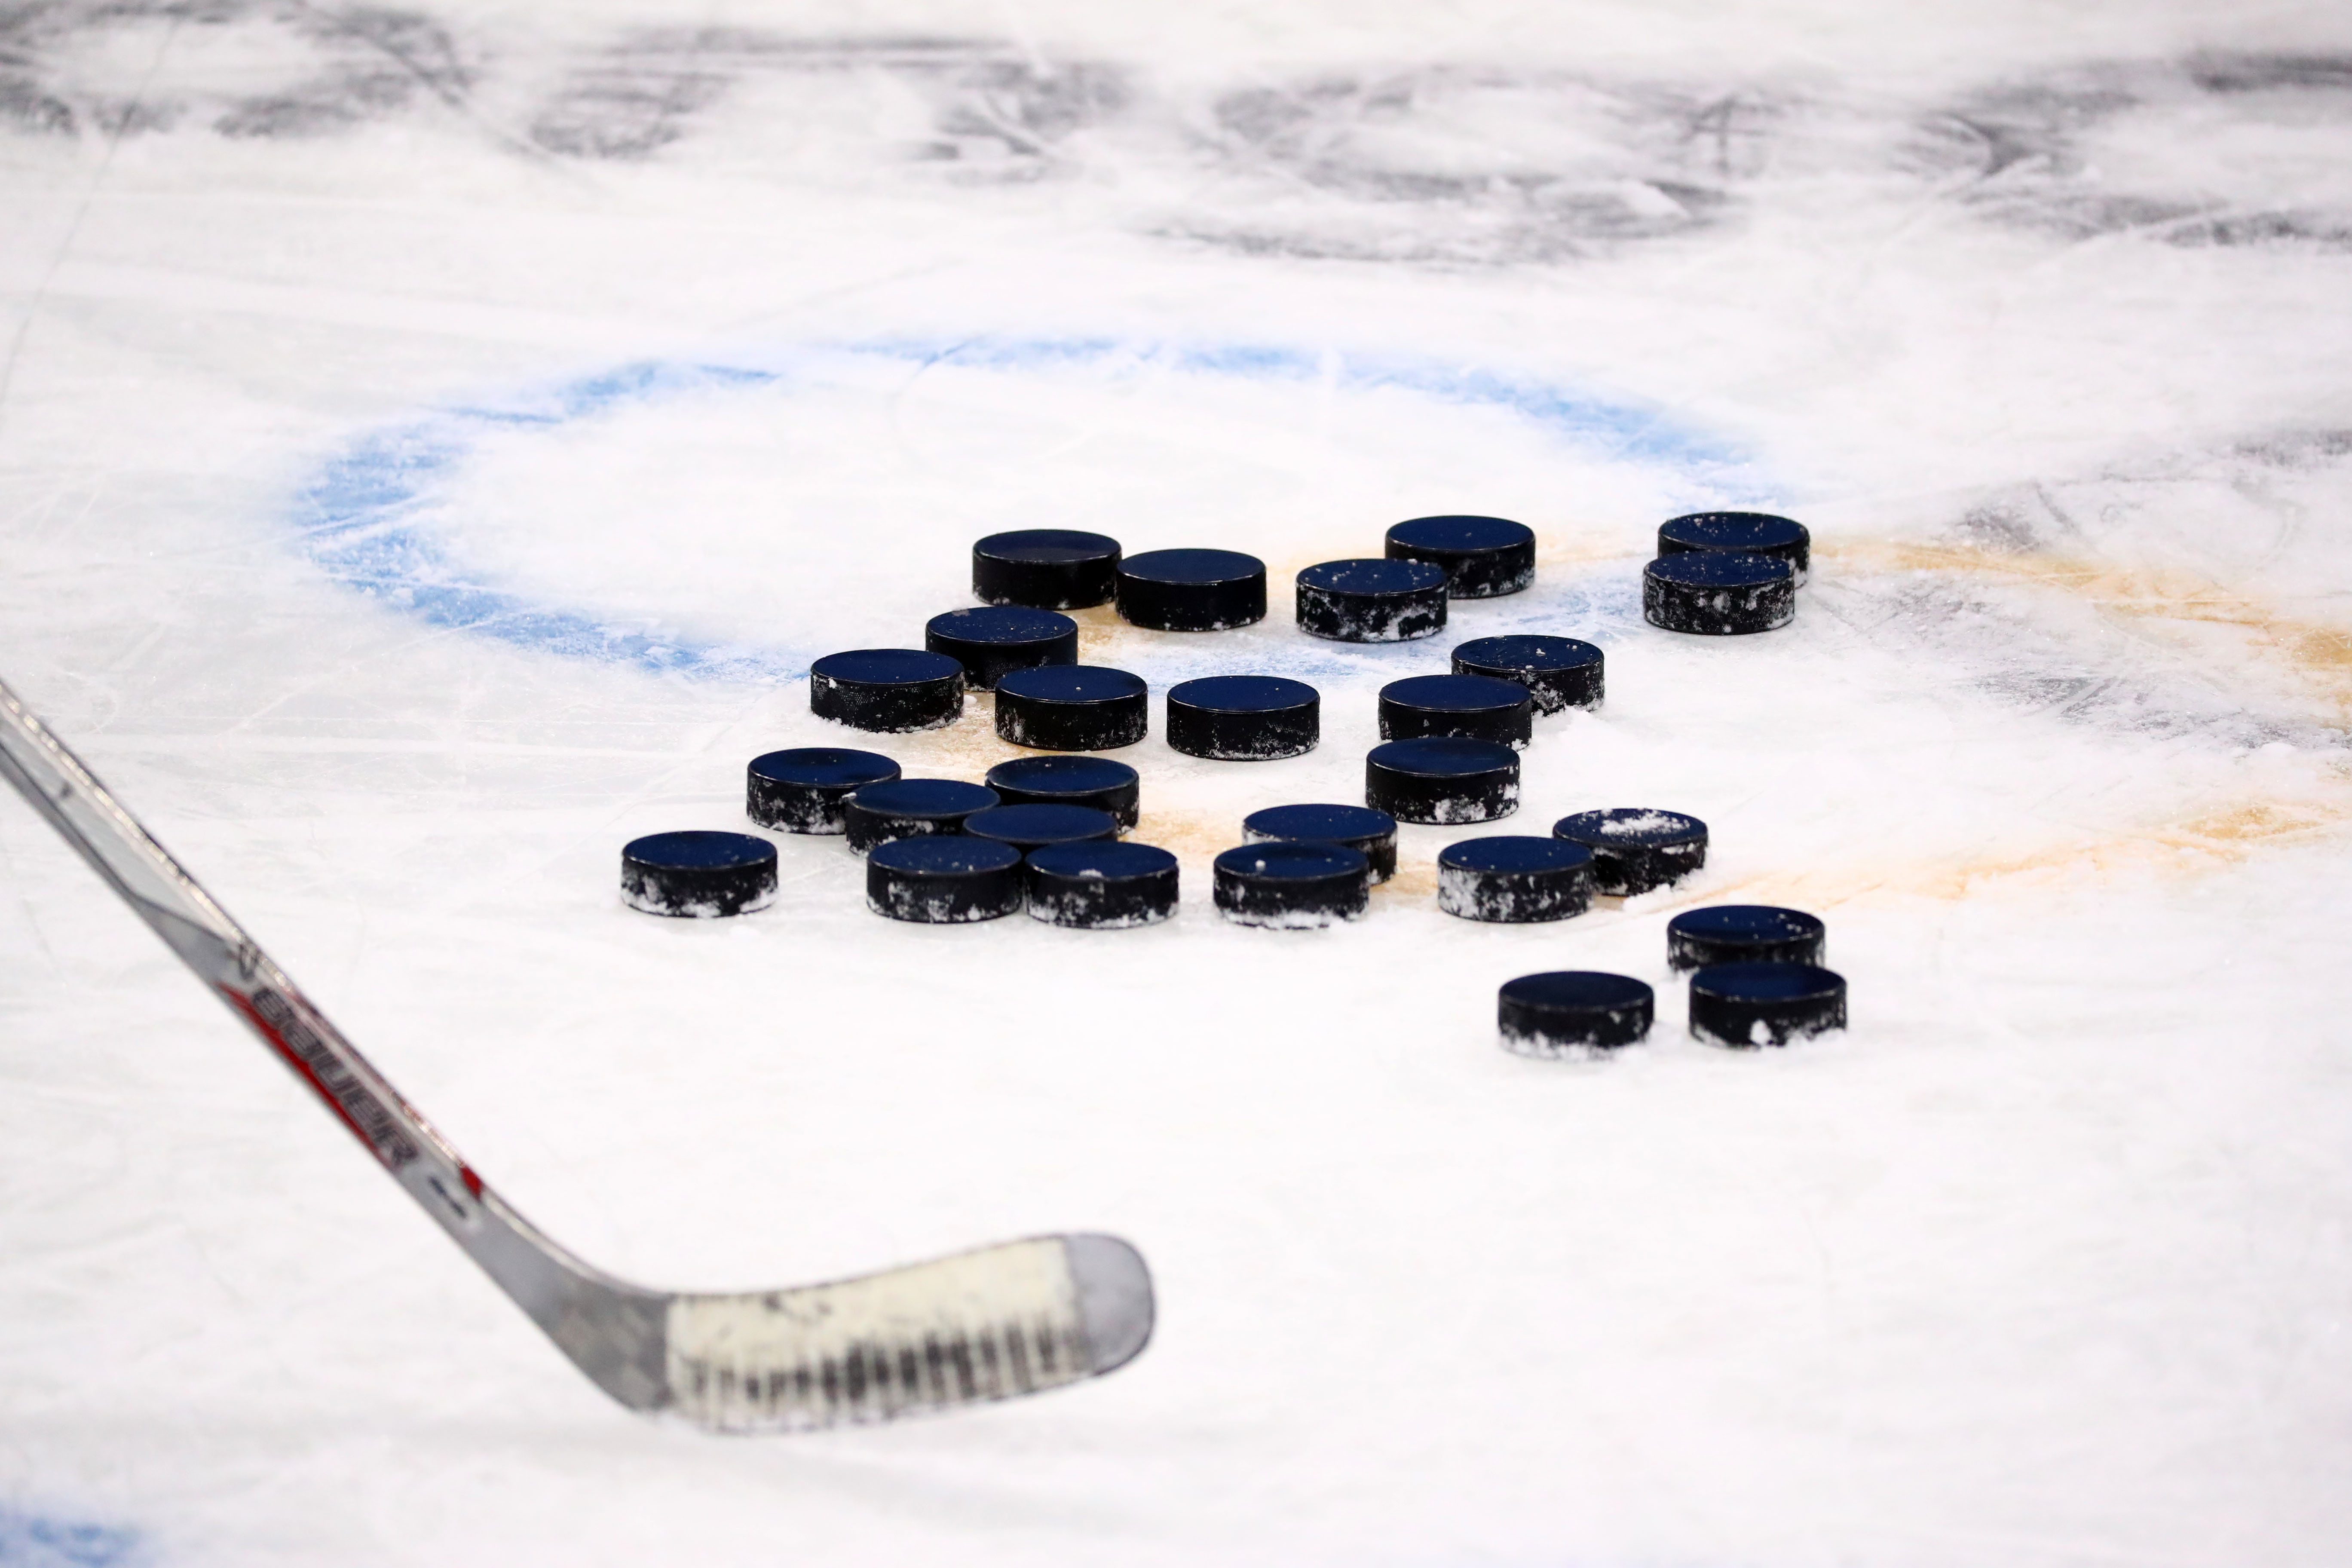 Winter Olympics is giving U.S. hockey players chance at spotlight